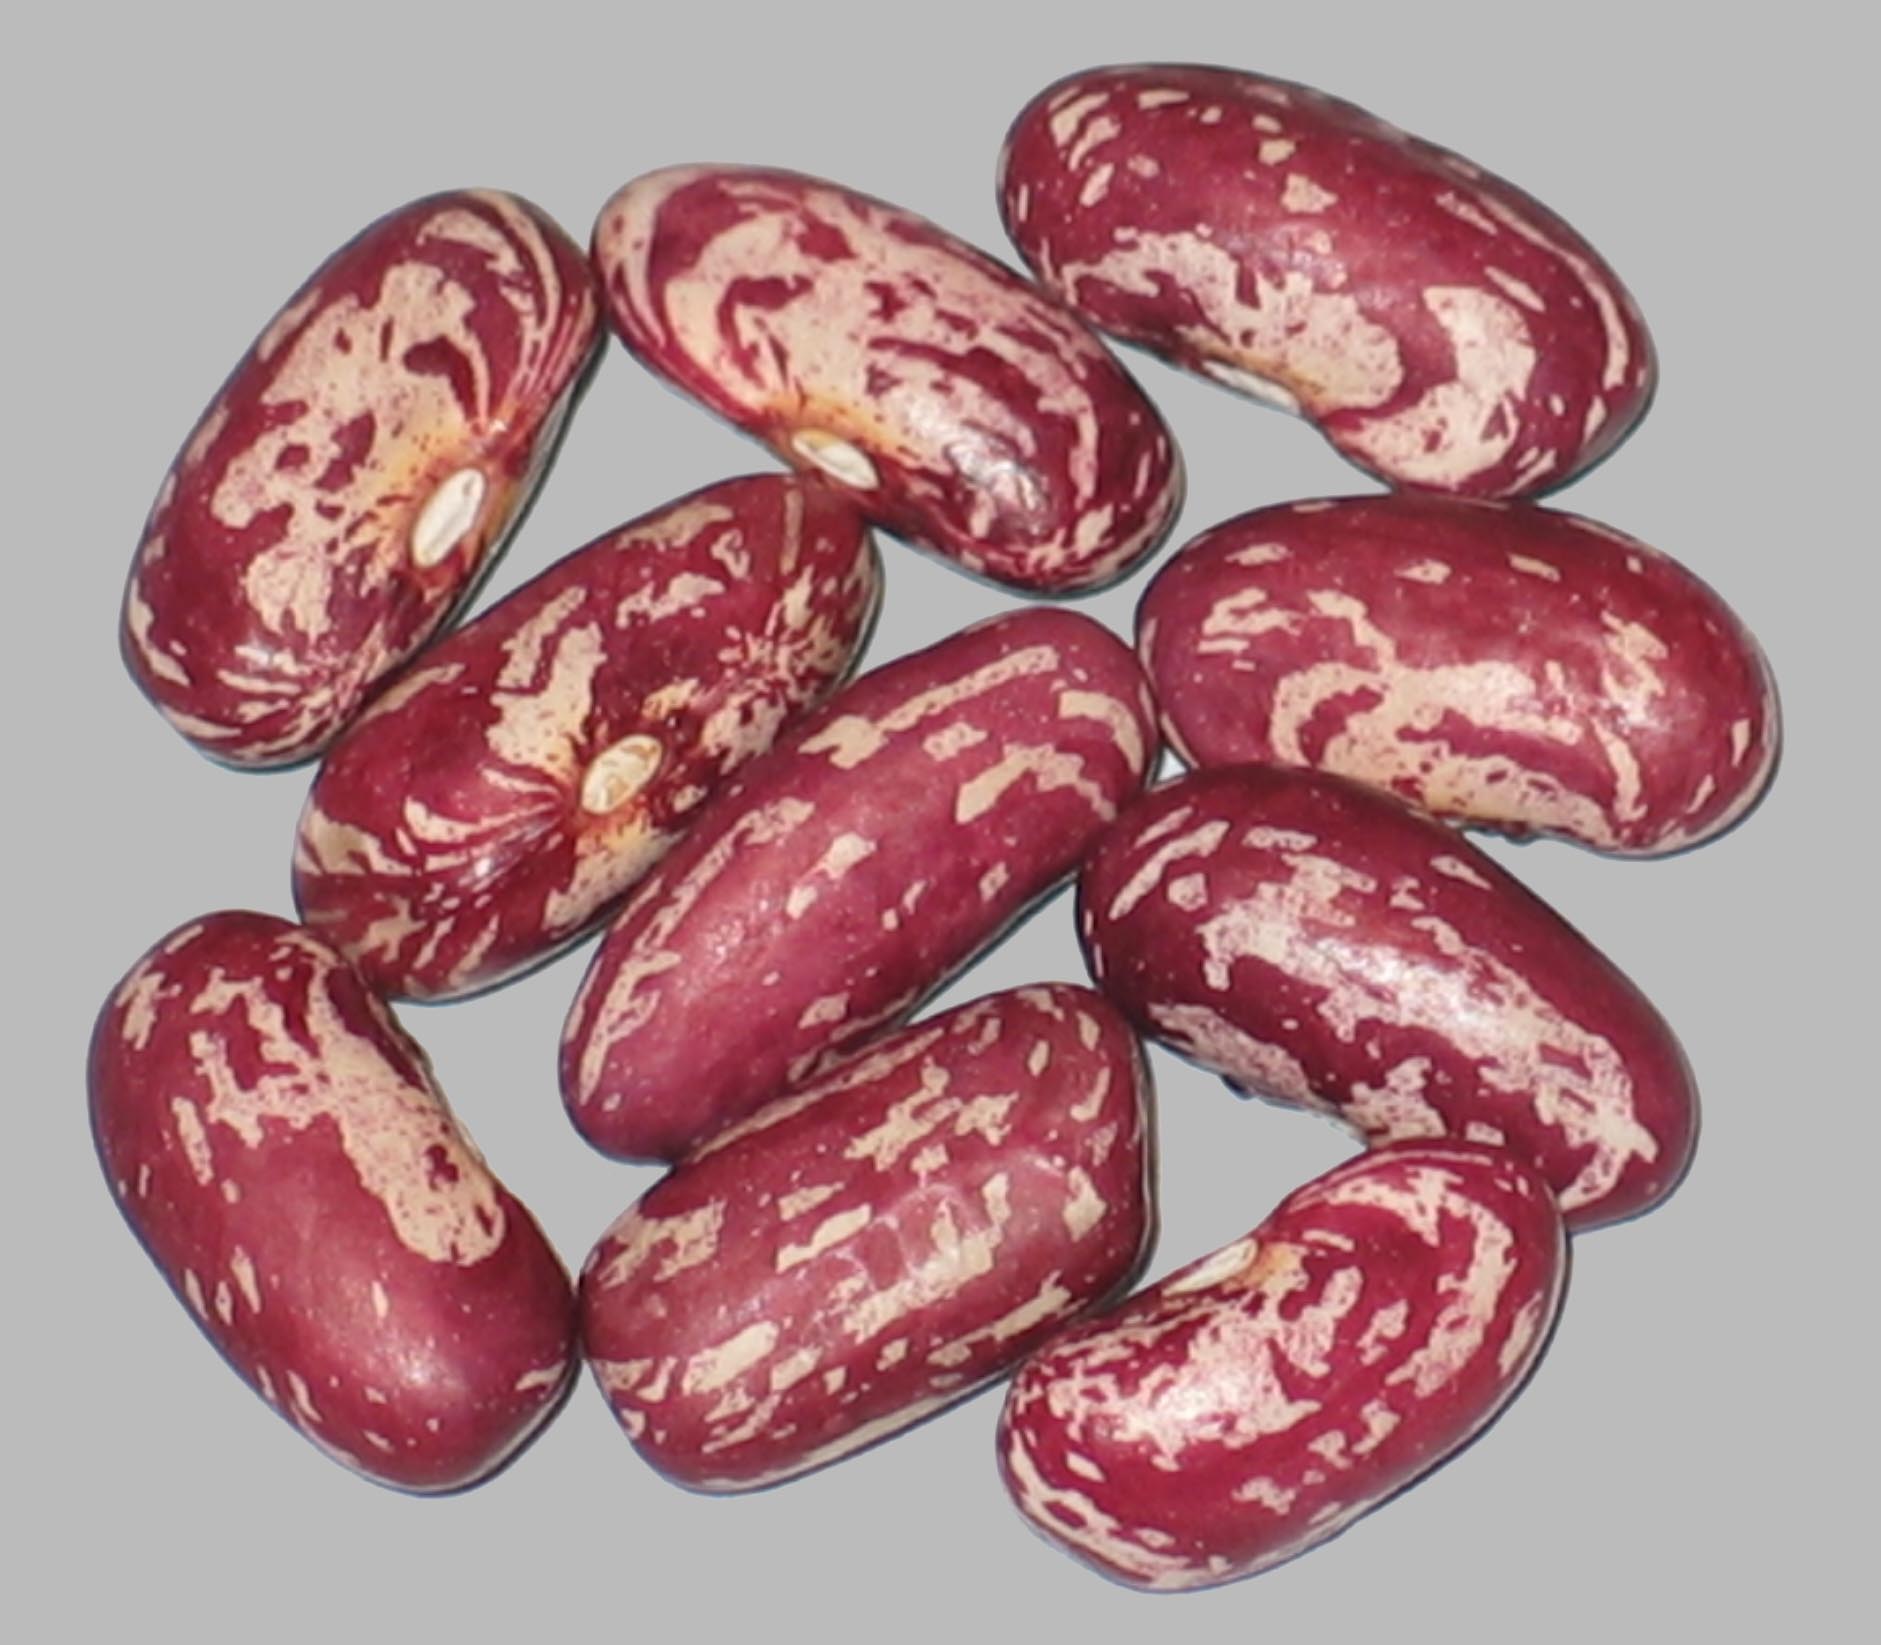 image of CIAT Bean G-8043 beans